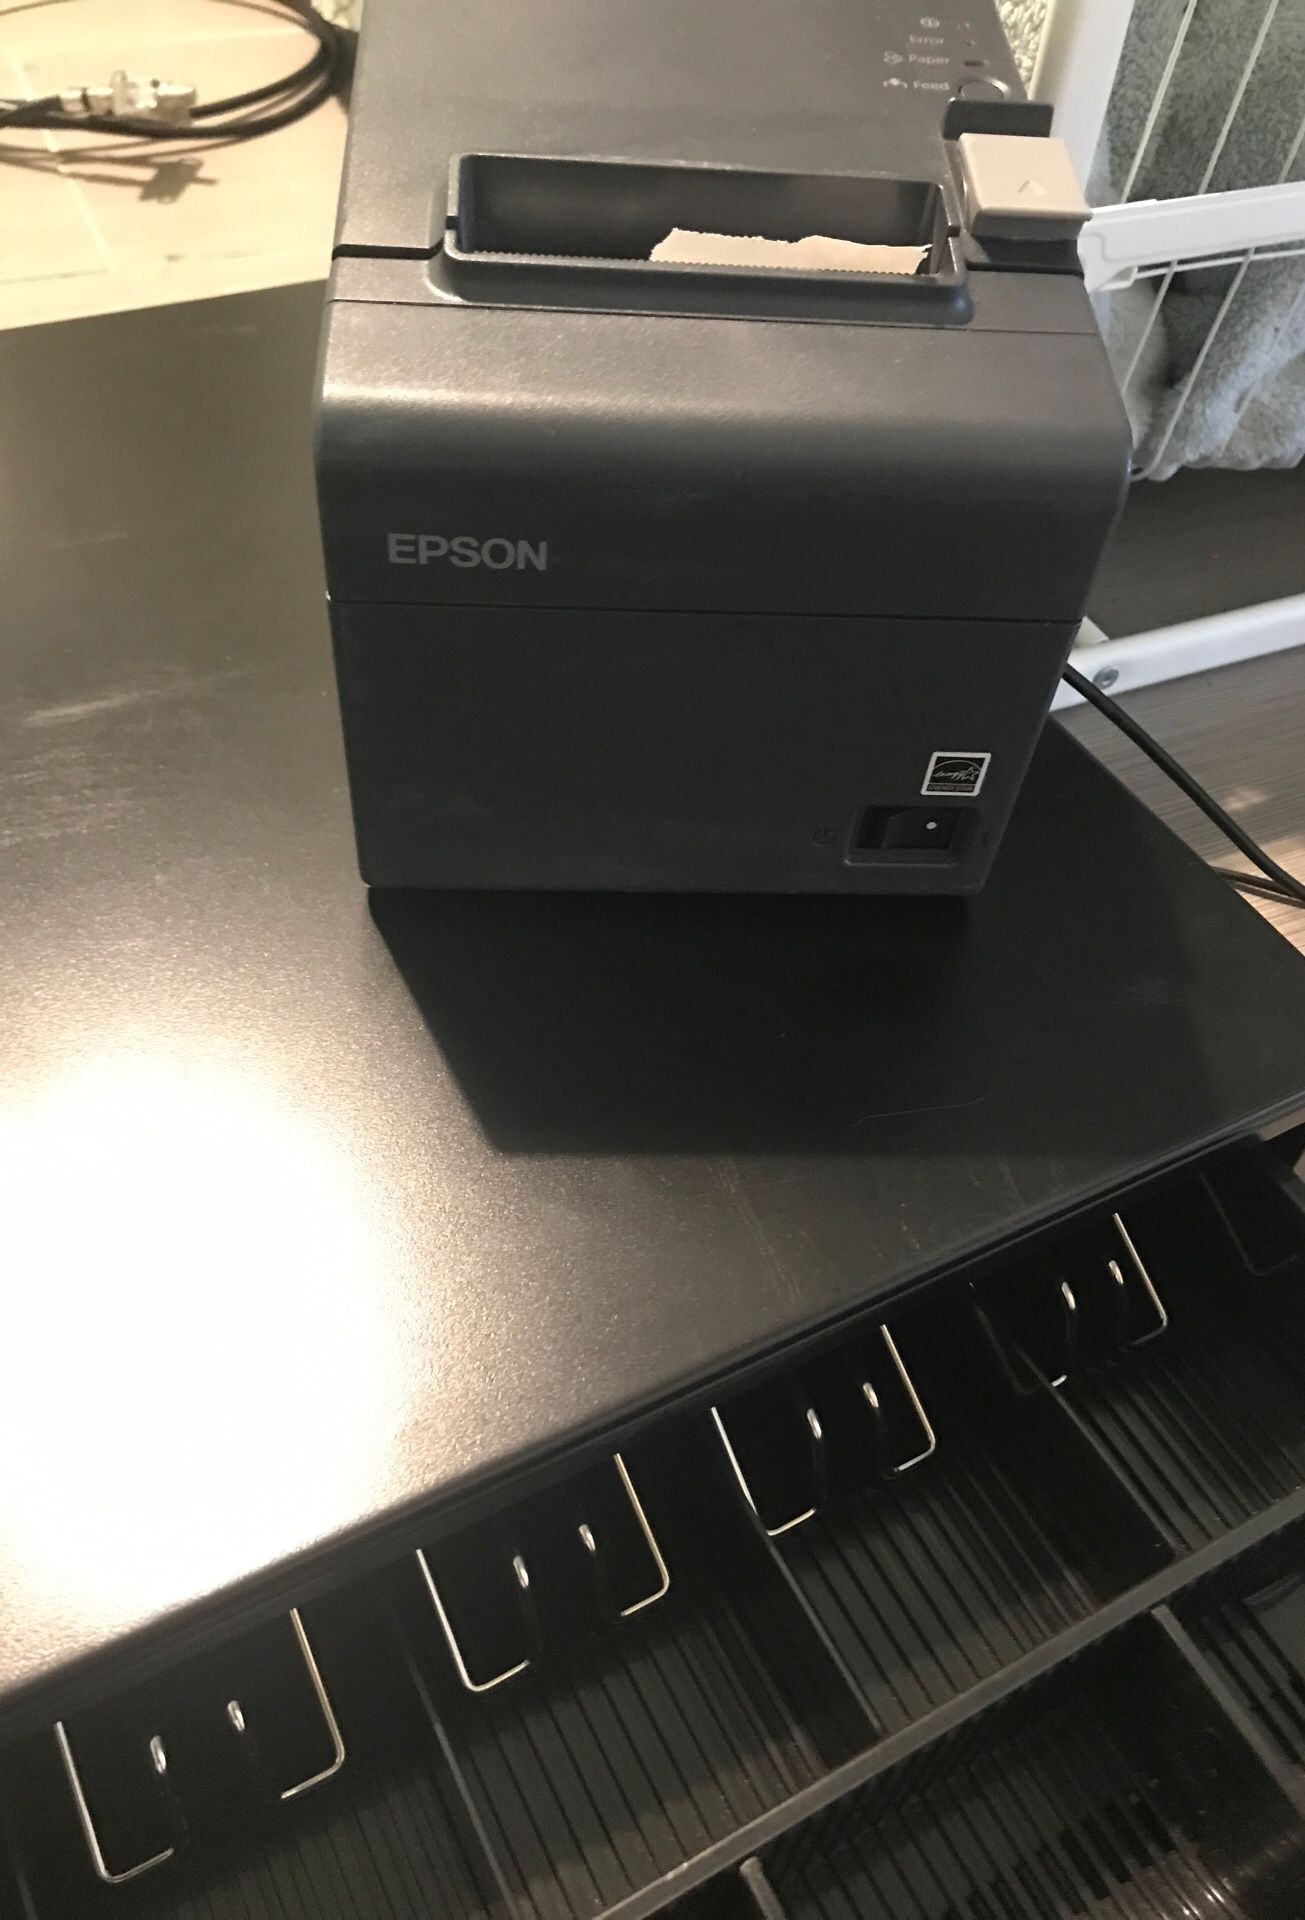 Epson cash drawer and printer